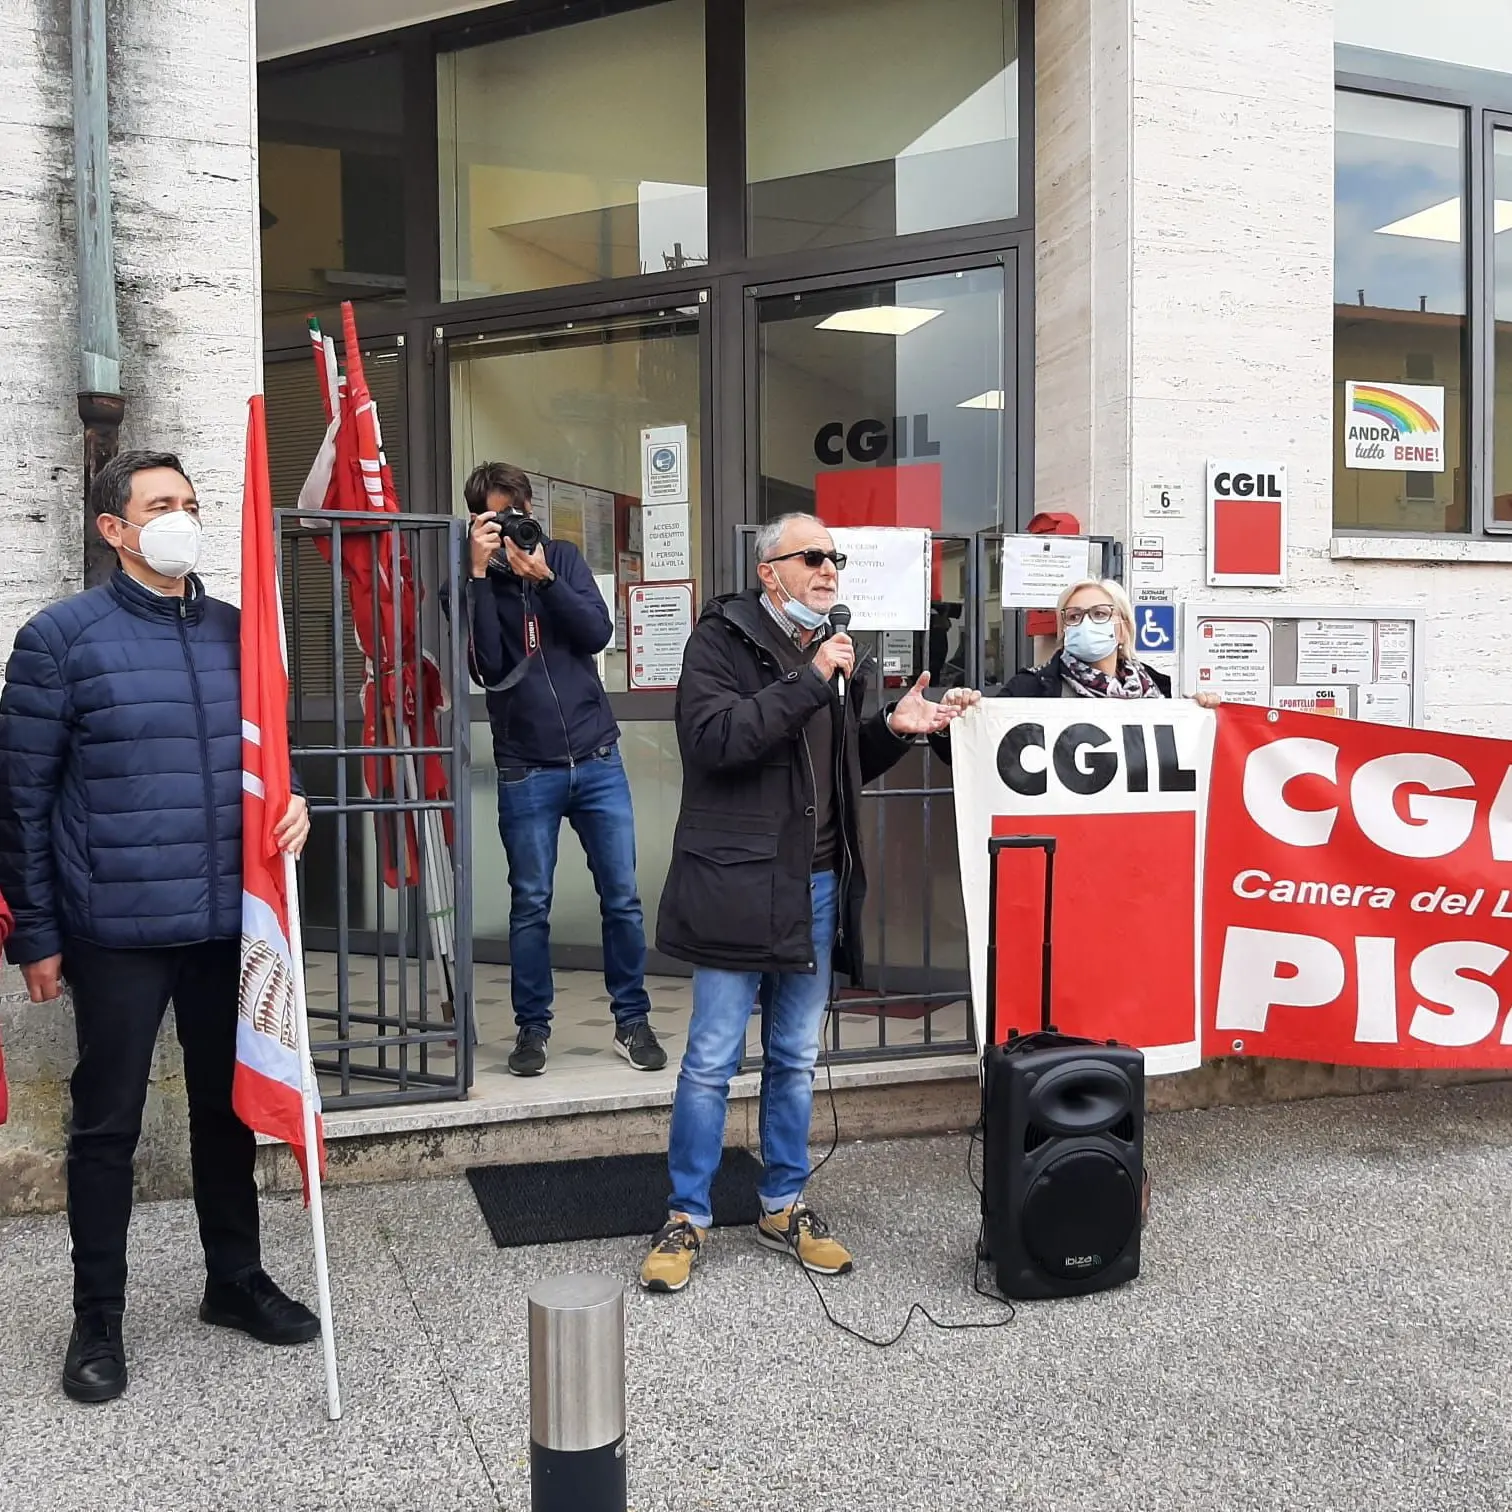 'Ndrangheta in Toscana, la Cgil si costituirà parte civile